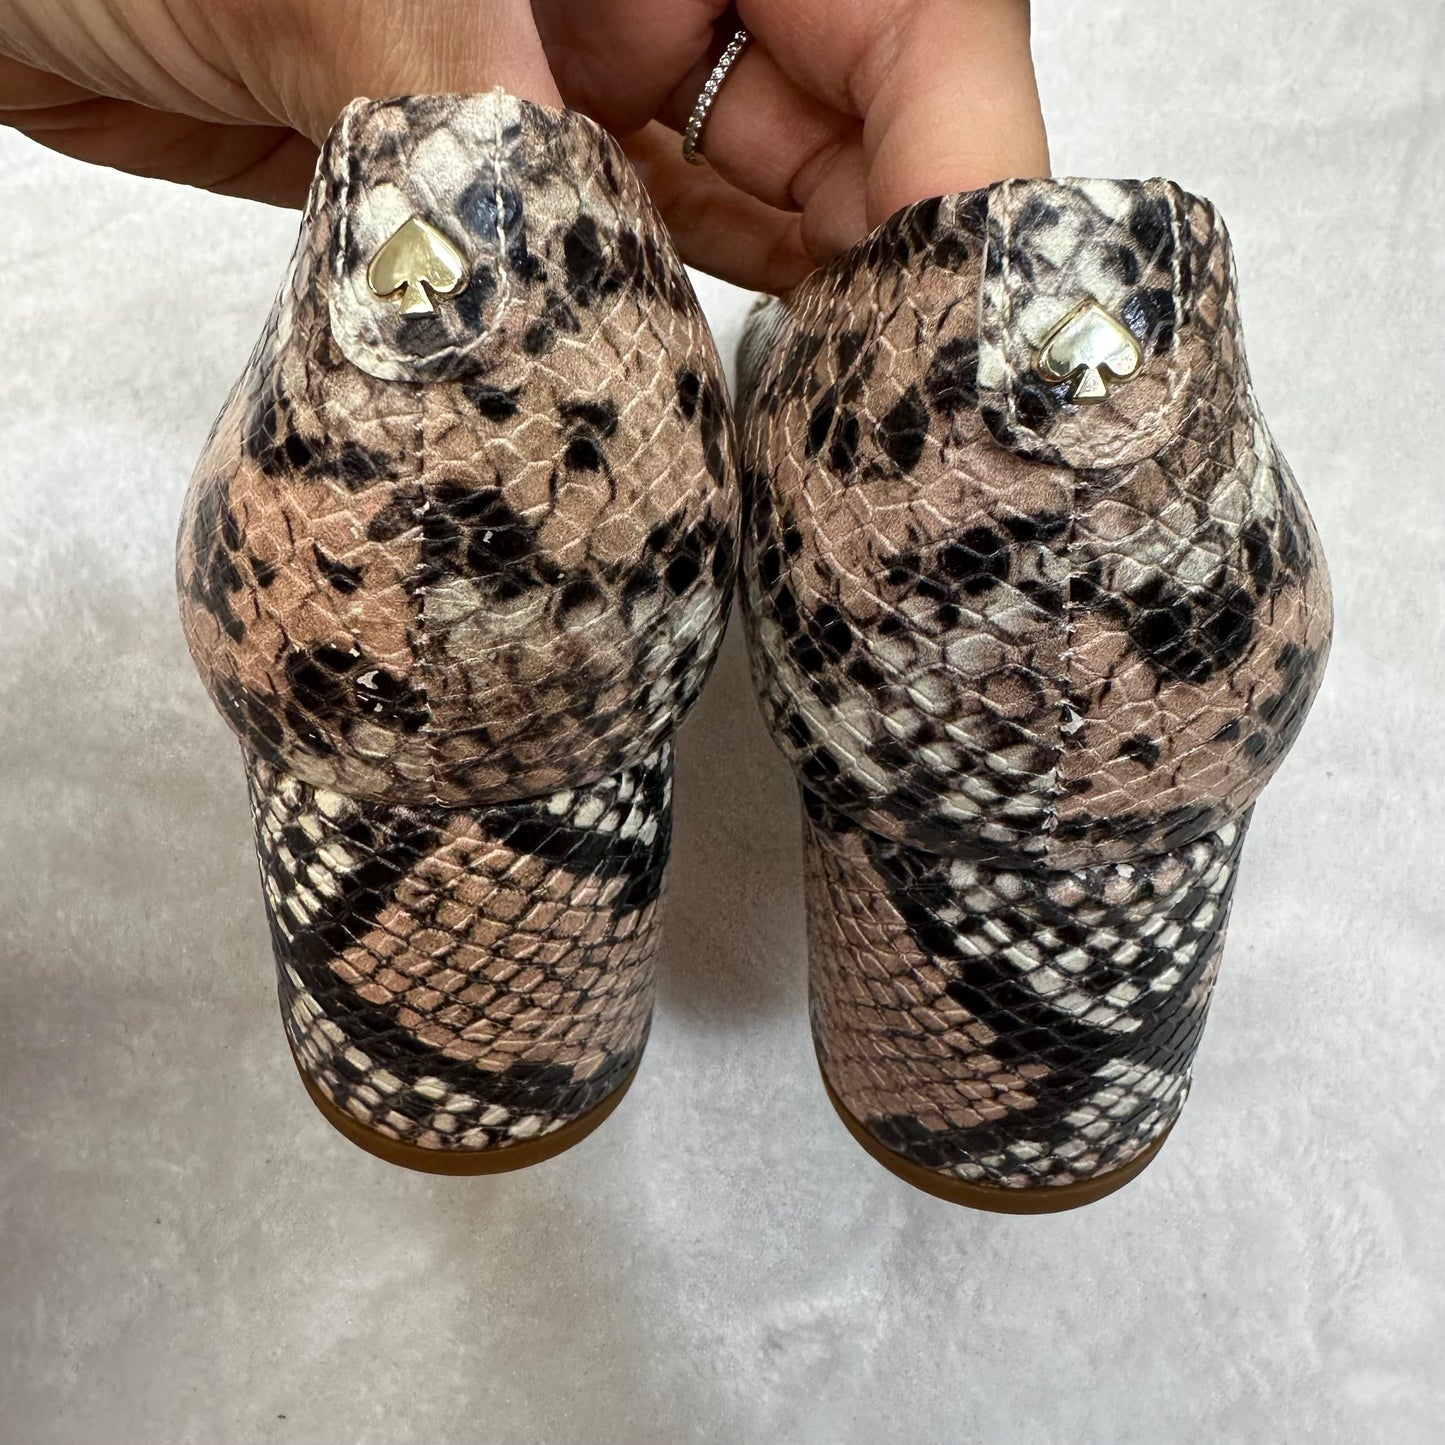 Snakeskin Print Shoes Heels Block Kate Spade, Size 6